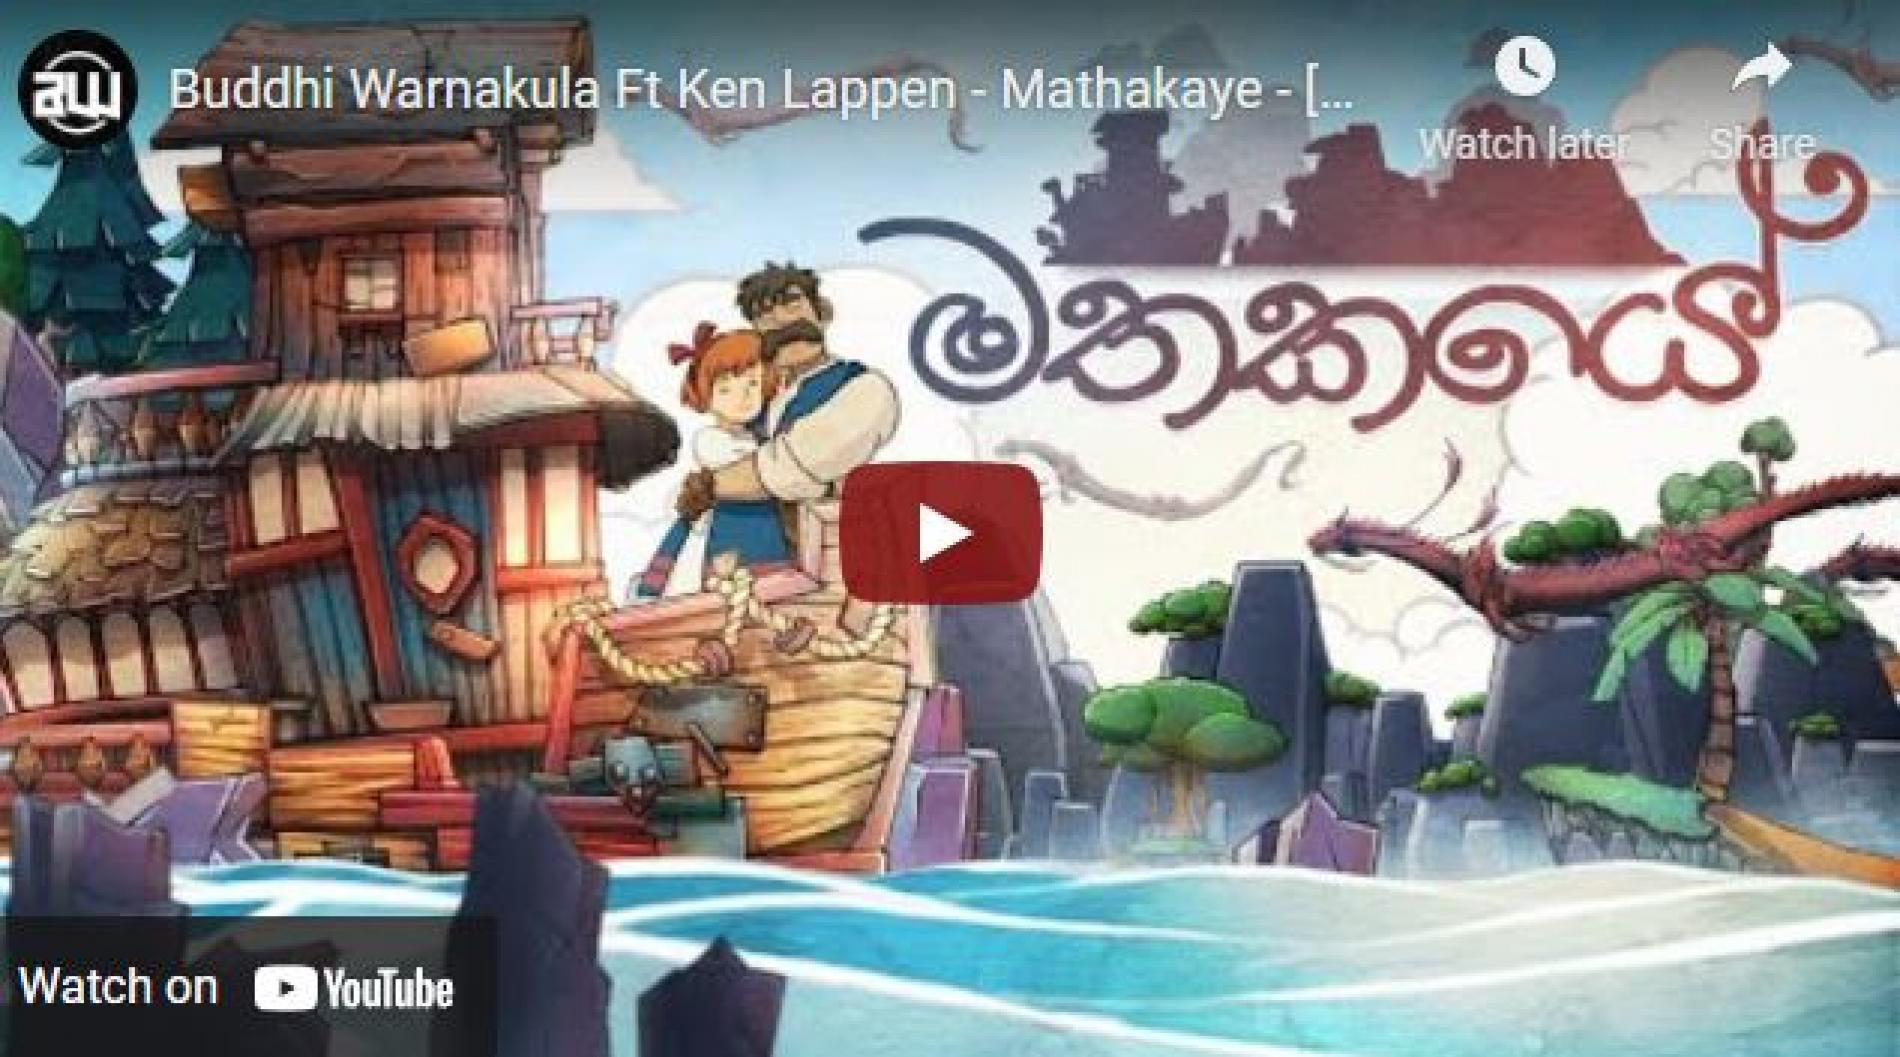 New Music : Buddhi Warnakula Ft Ken Lappen – Mathakaye – [Official Lyrics Video]